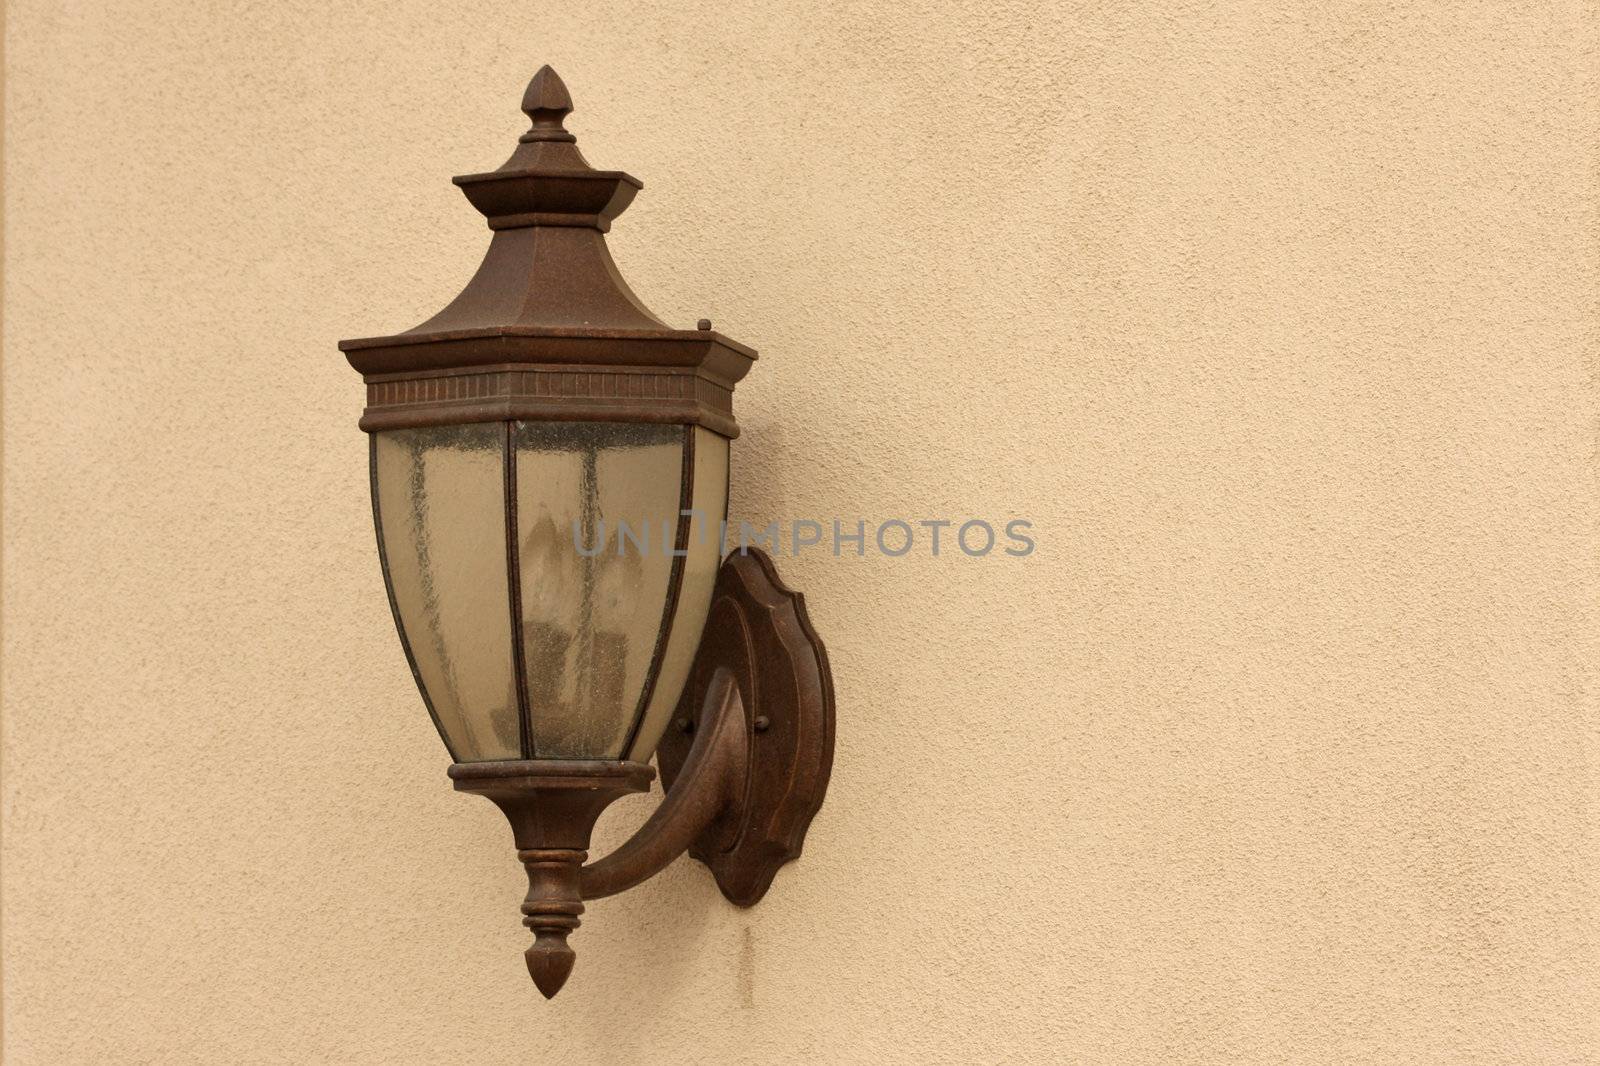 Beautiful Wall Lamp on Stucco Wall
